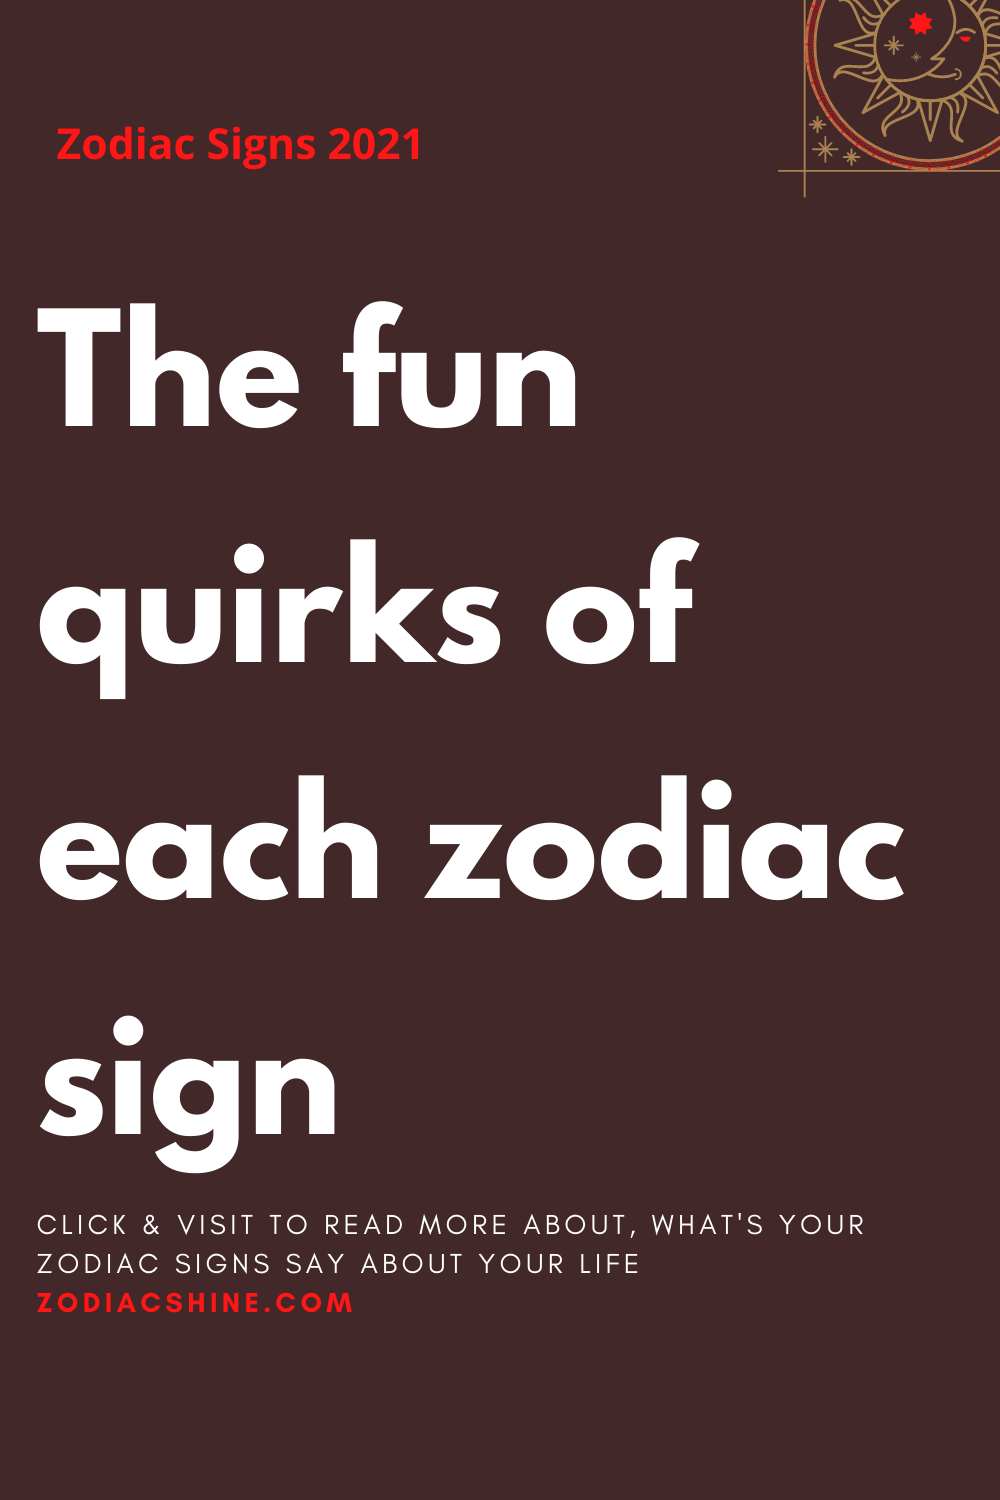 The fun quirks of each zodiac sign